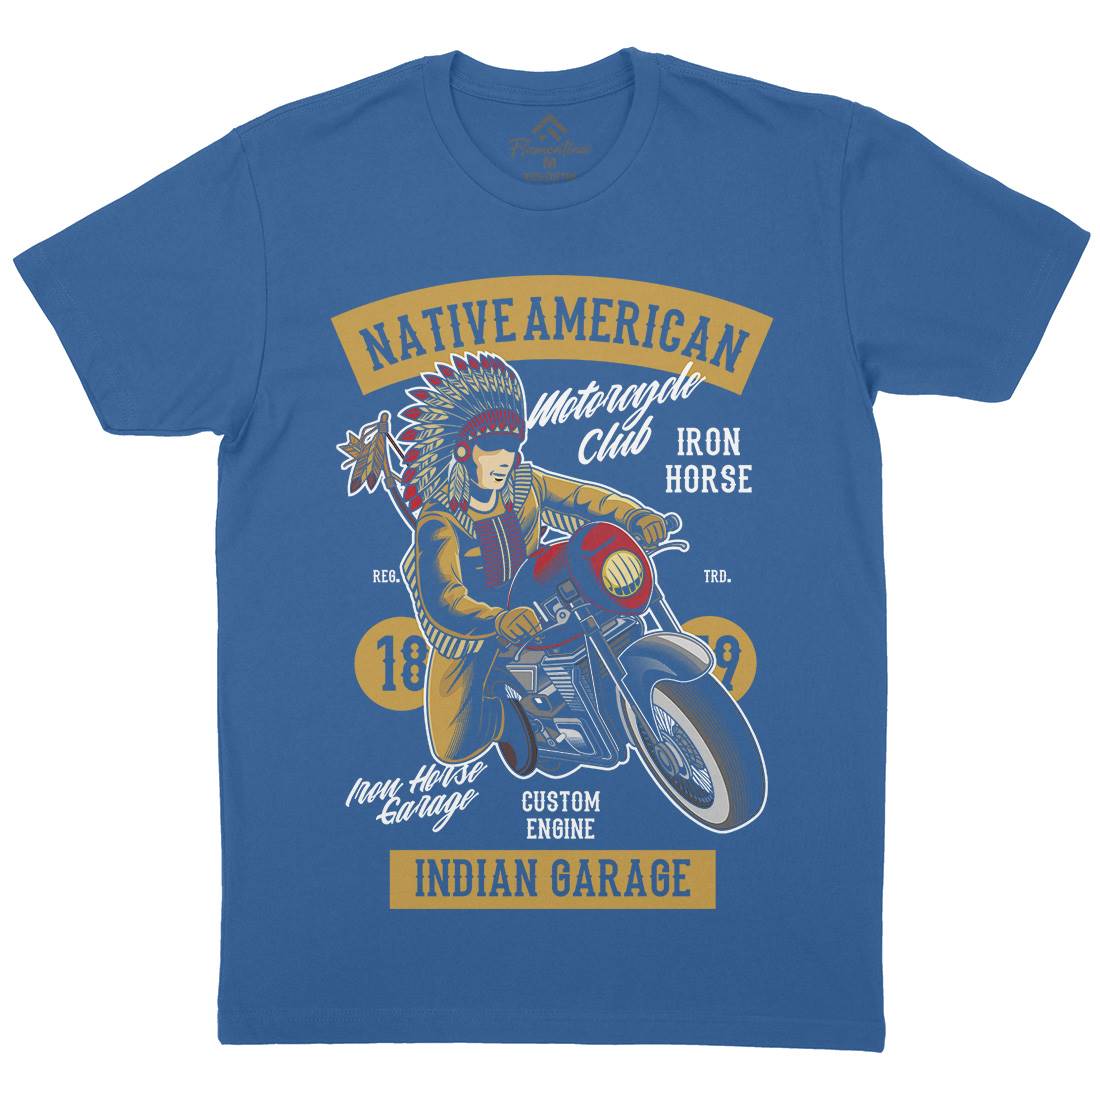 Native American Biker Mens Crew Neck T-Shirt Motorcycles C400